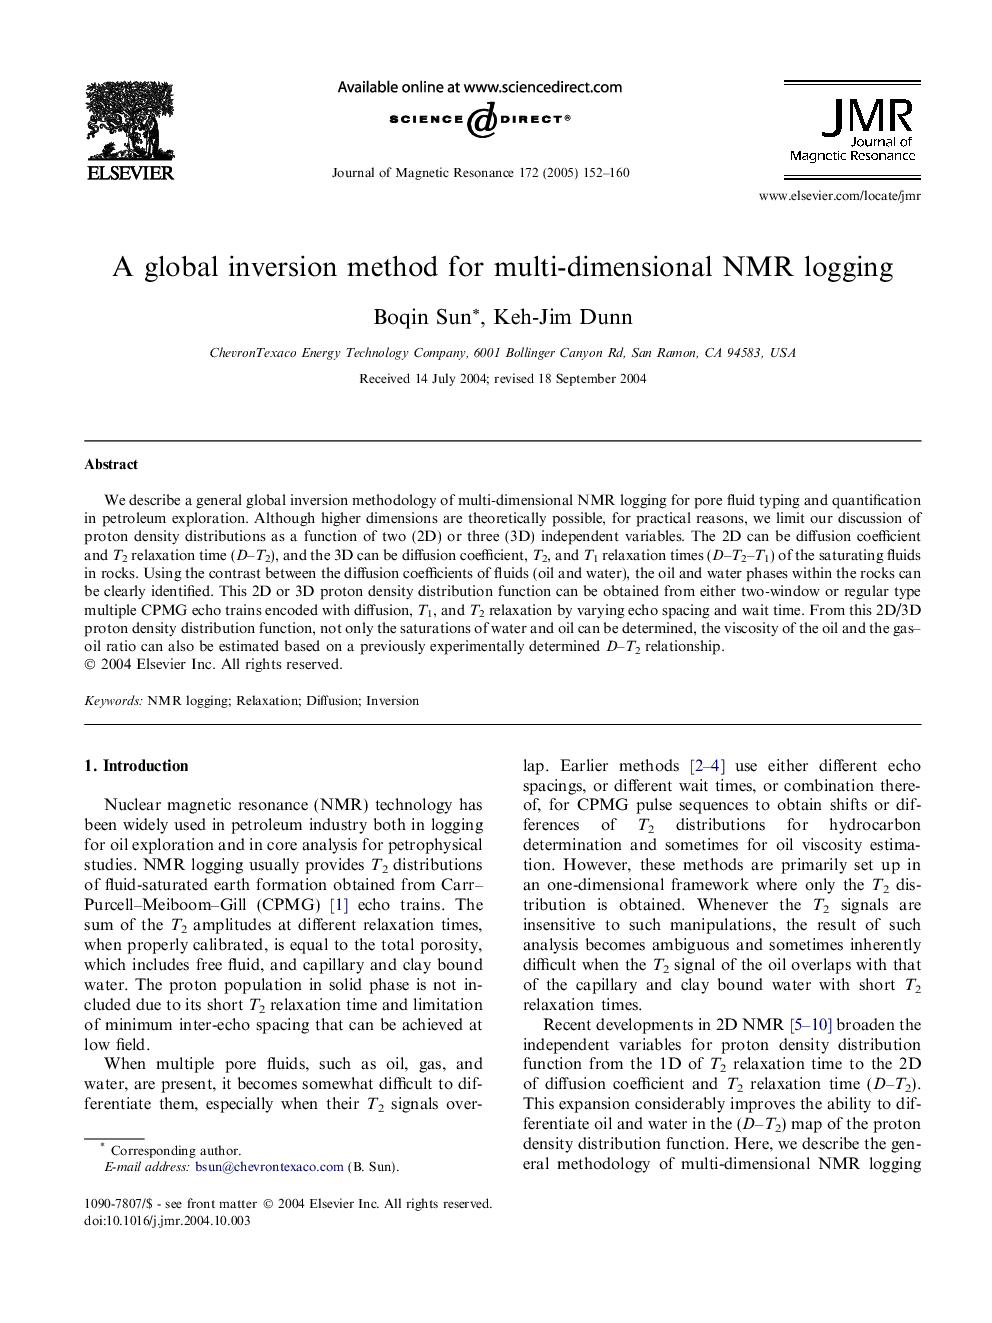 A global inversion method for multi-dimensional NMR logging